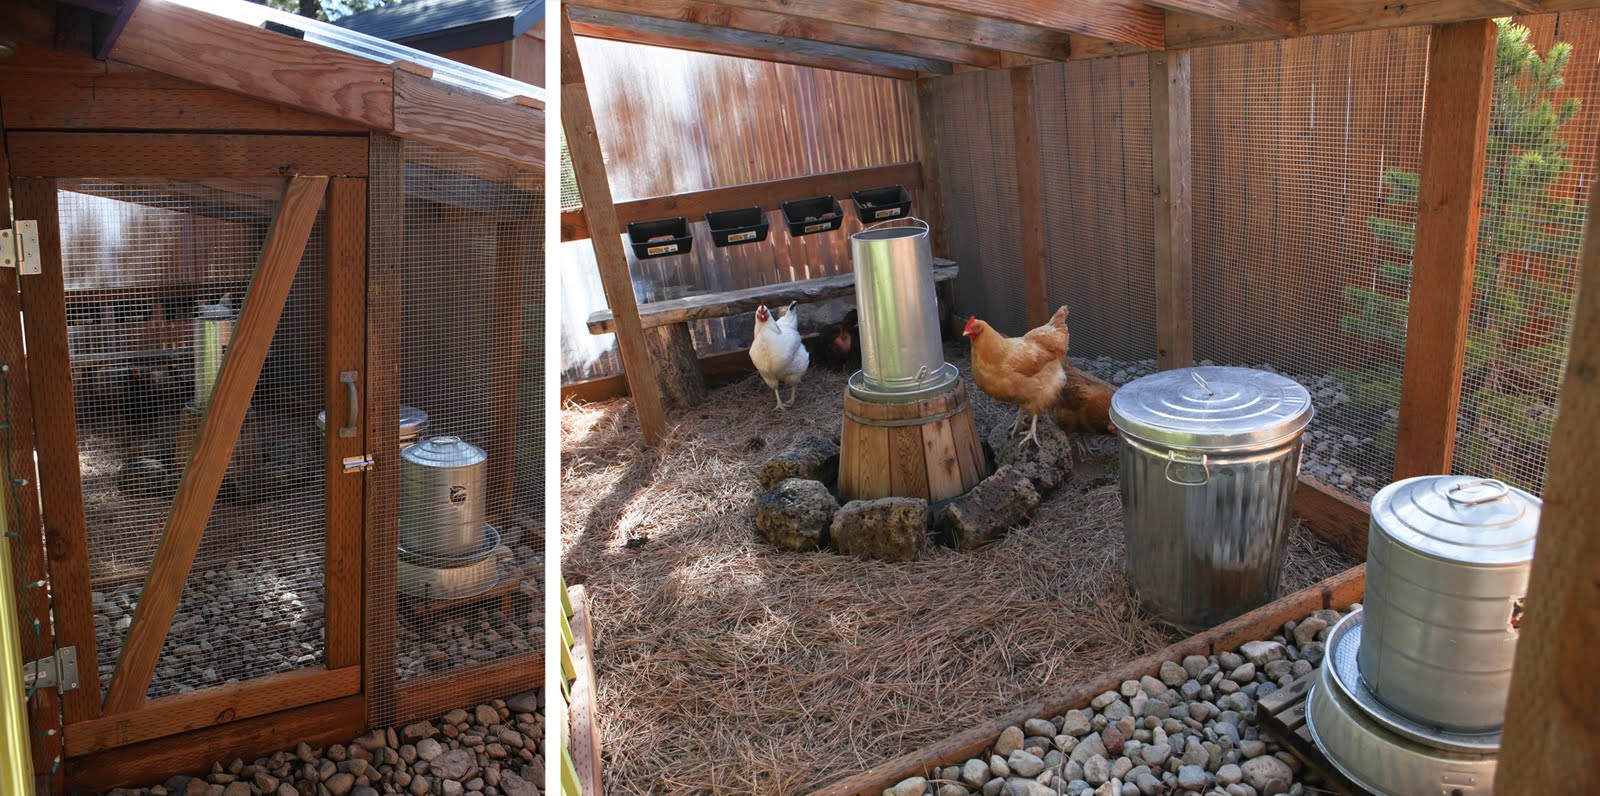 The Poop Hammock - Keeping Your Coop Clean | Community Chickens